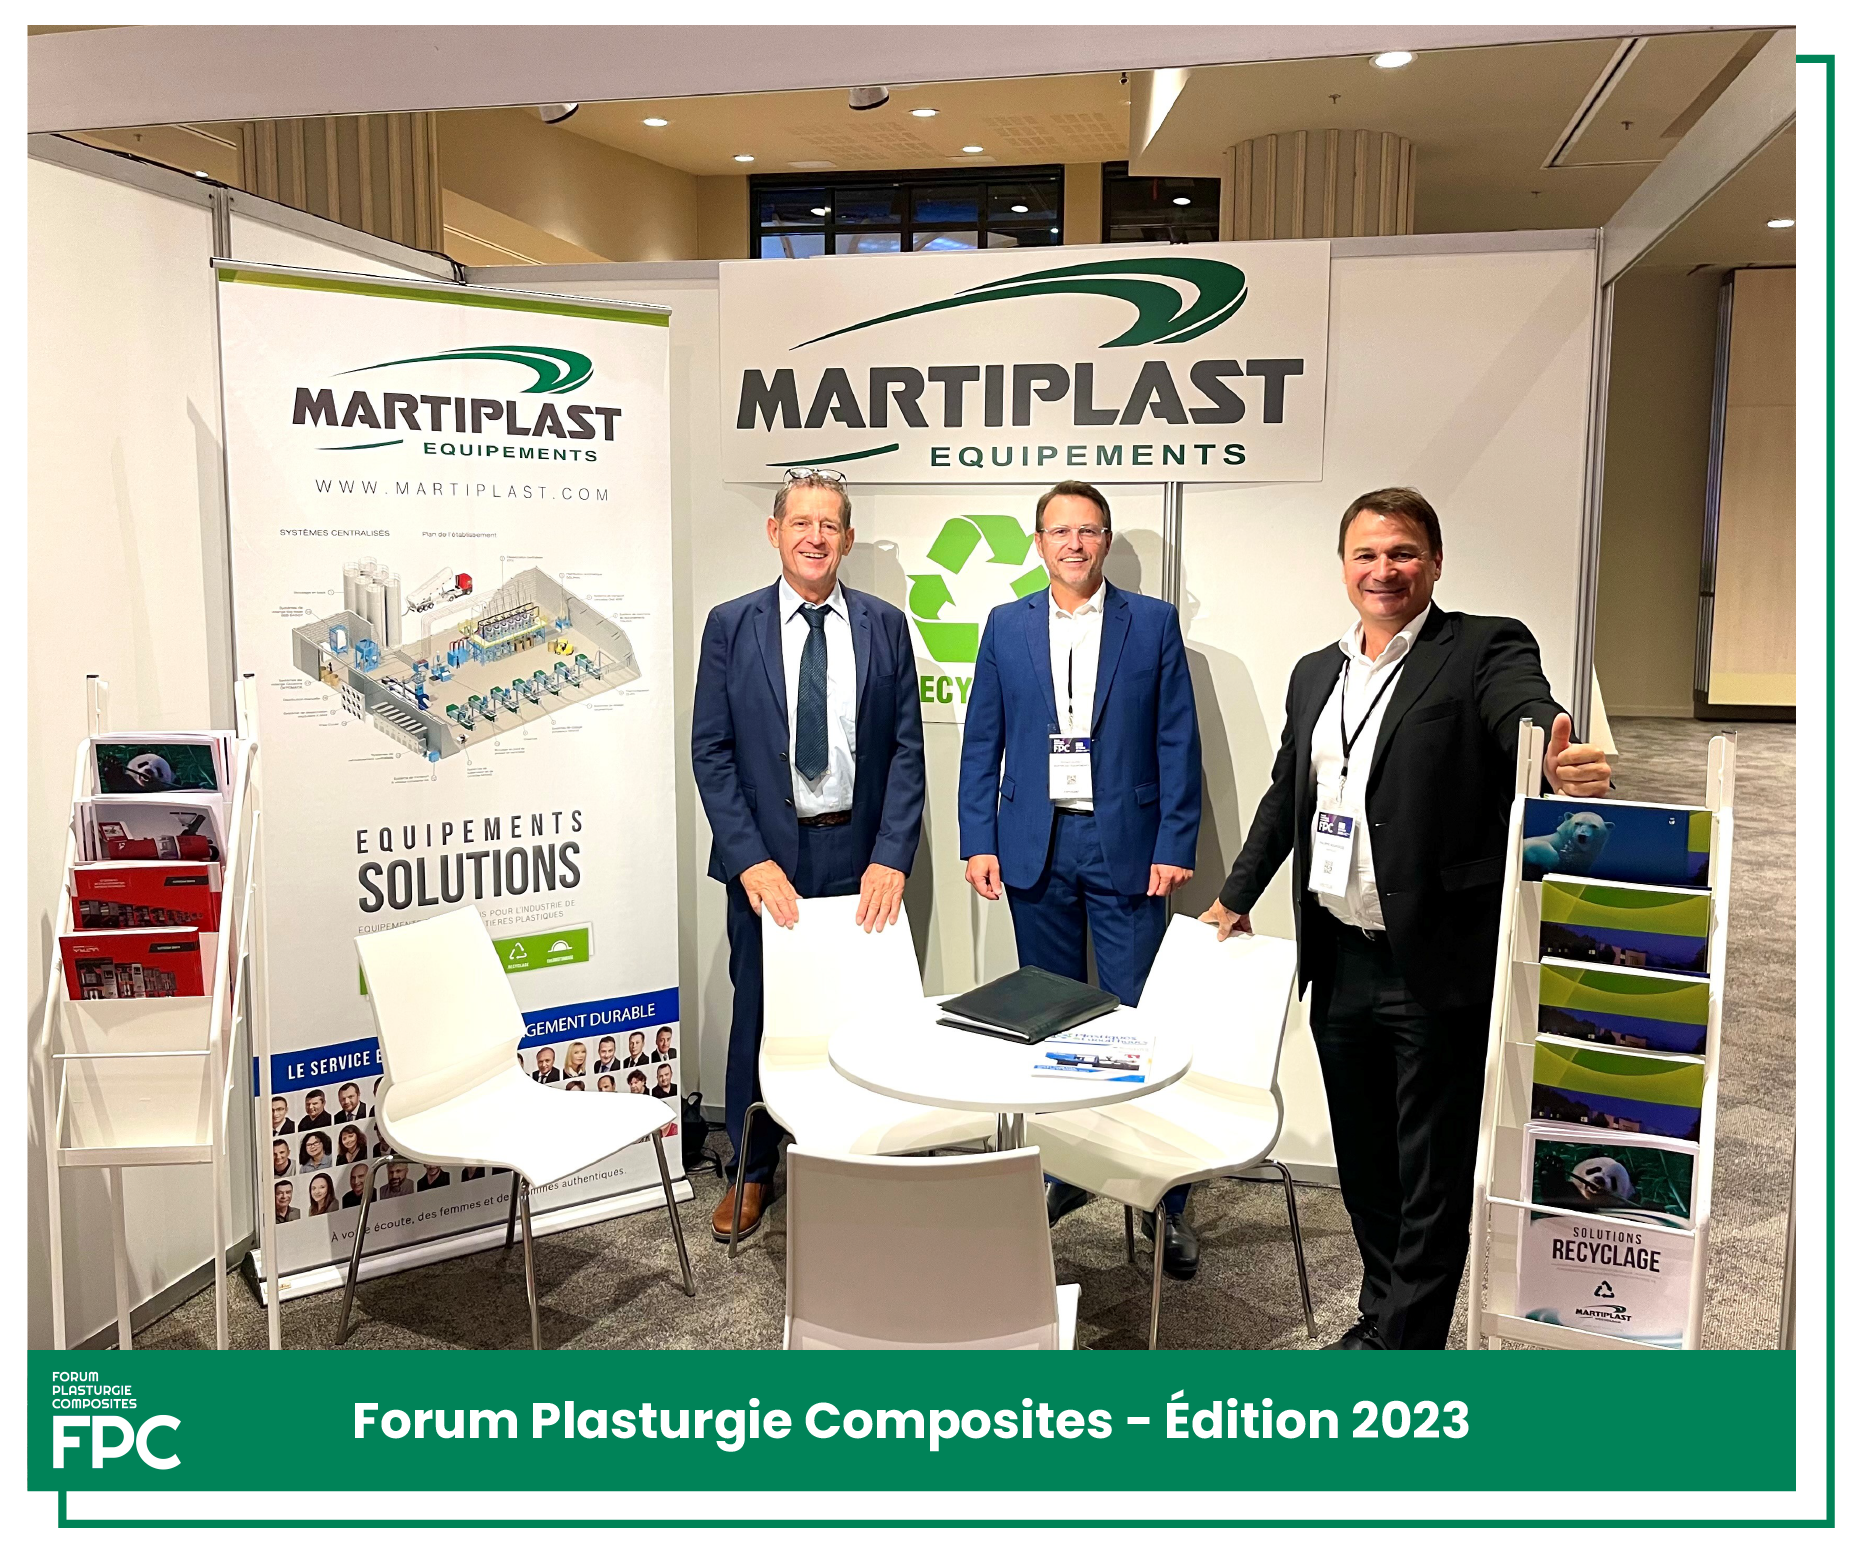 Martiplast-Forum-Plastique-Composites 2023.png